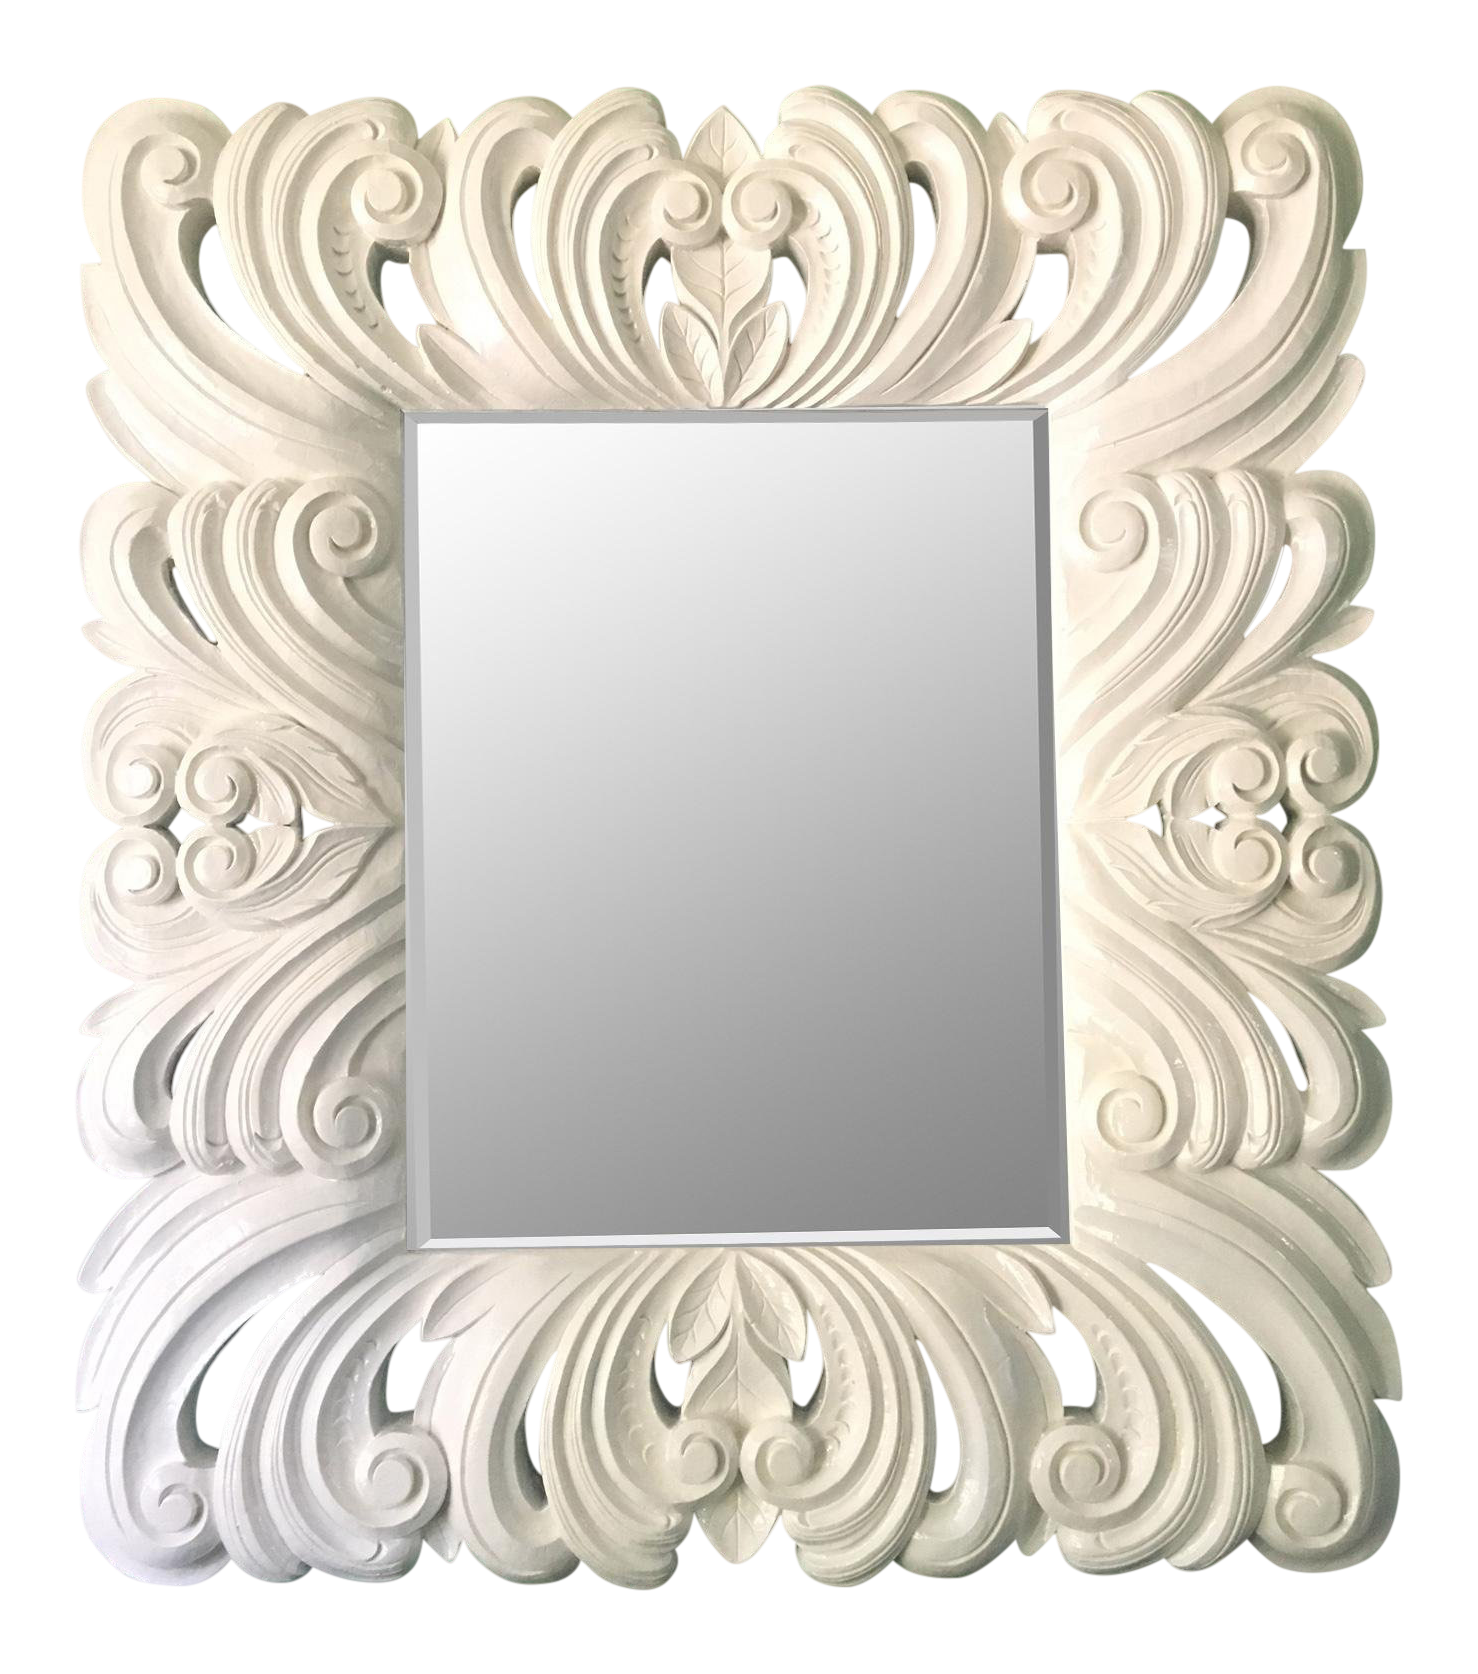 Baroque Framed Mirror in the Manner of Dorothy Draper